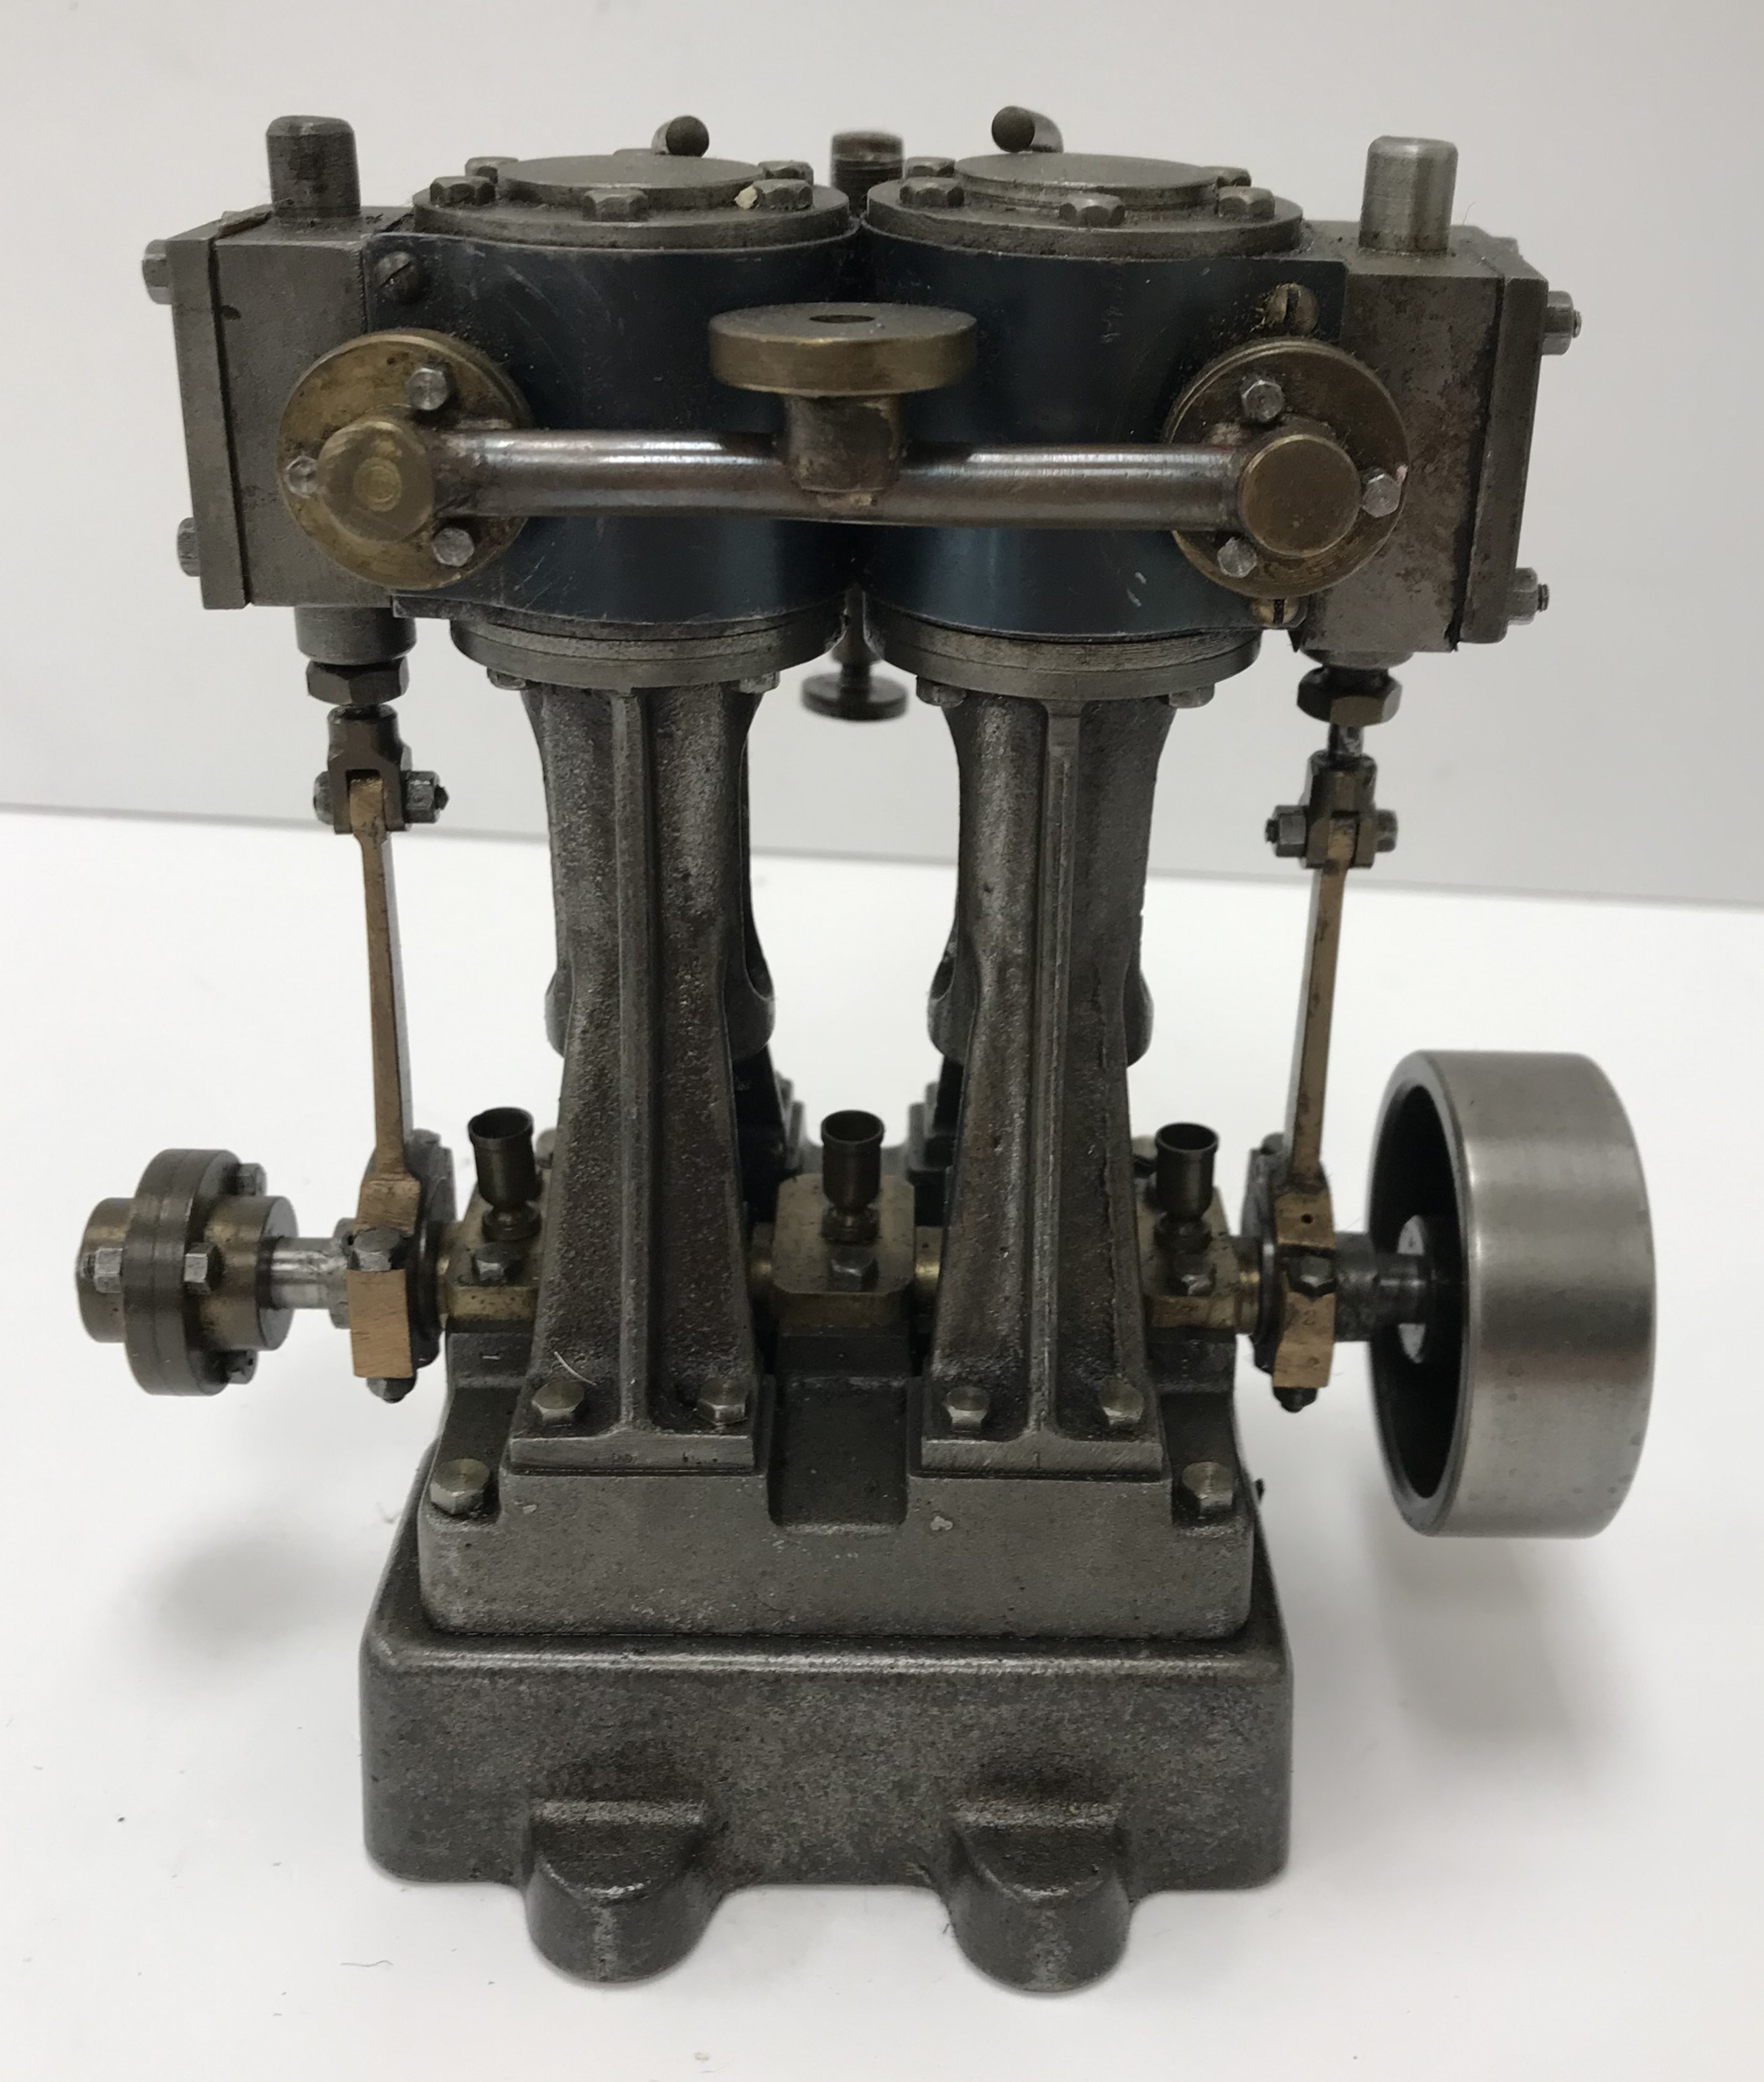 A Stuart Turner type D10 twin wheel stationary steam engine 15 cm high